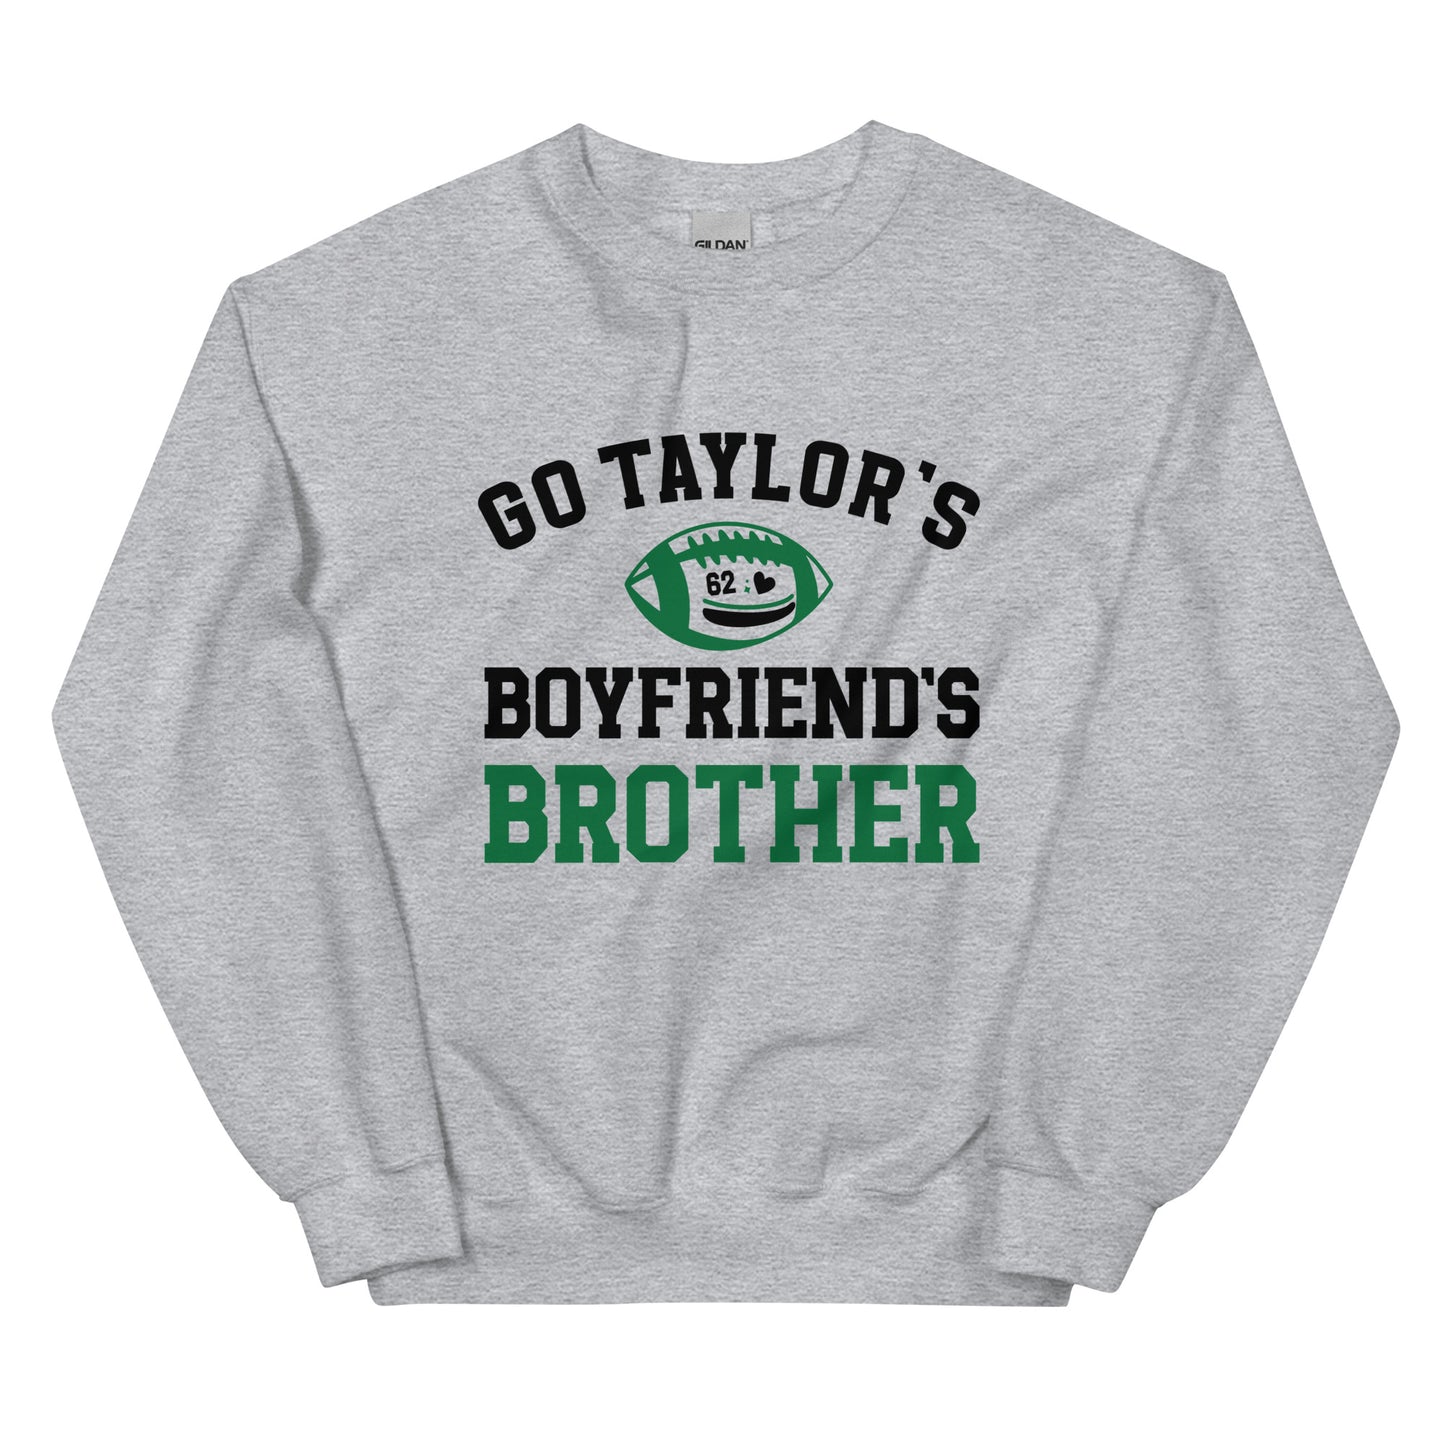 Go Taylor’s Boyfriends Brother Crew